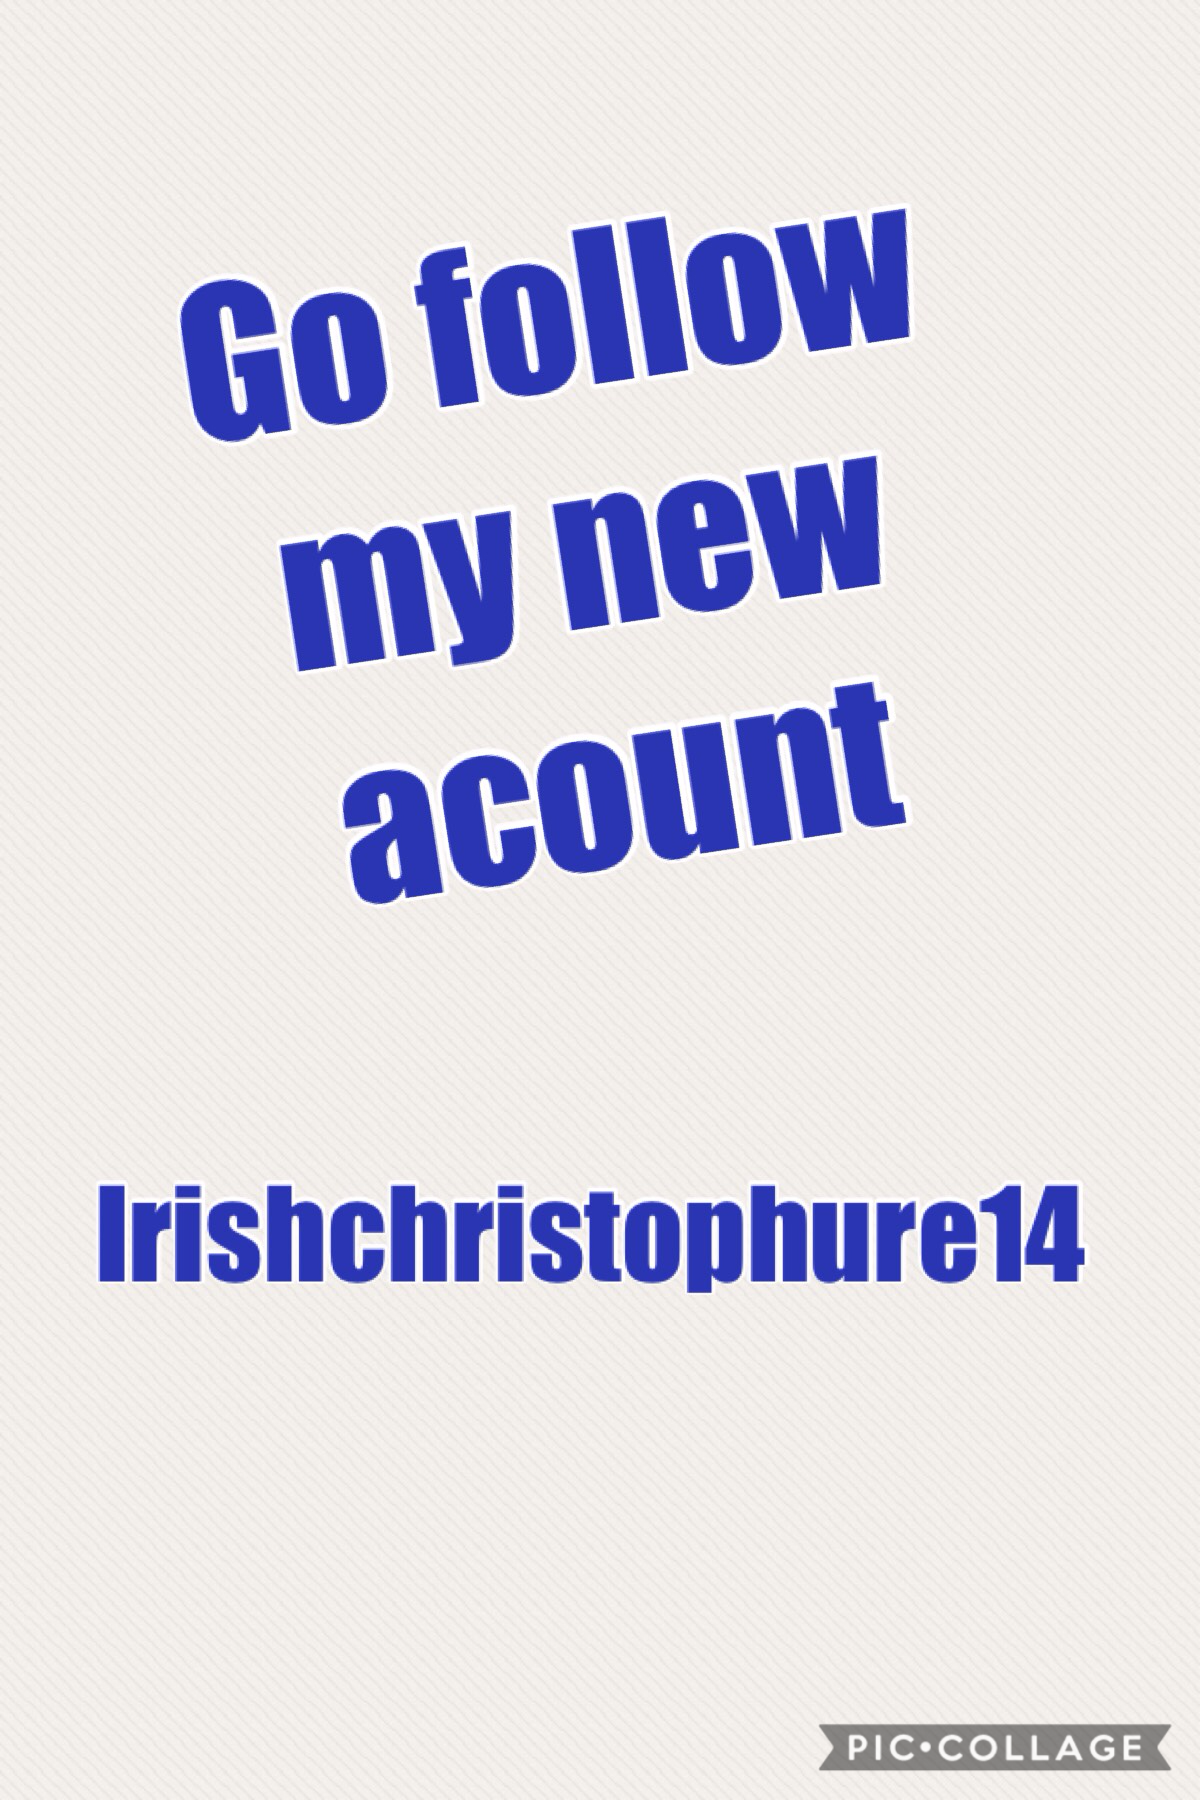 Irishchristophure14